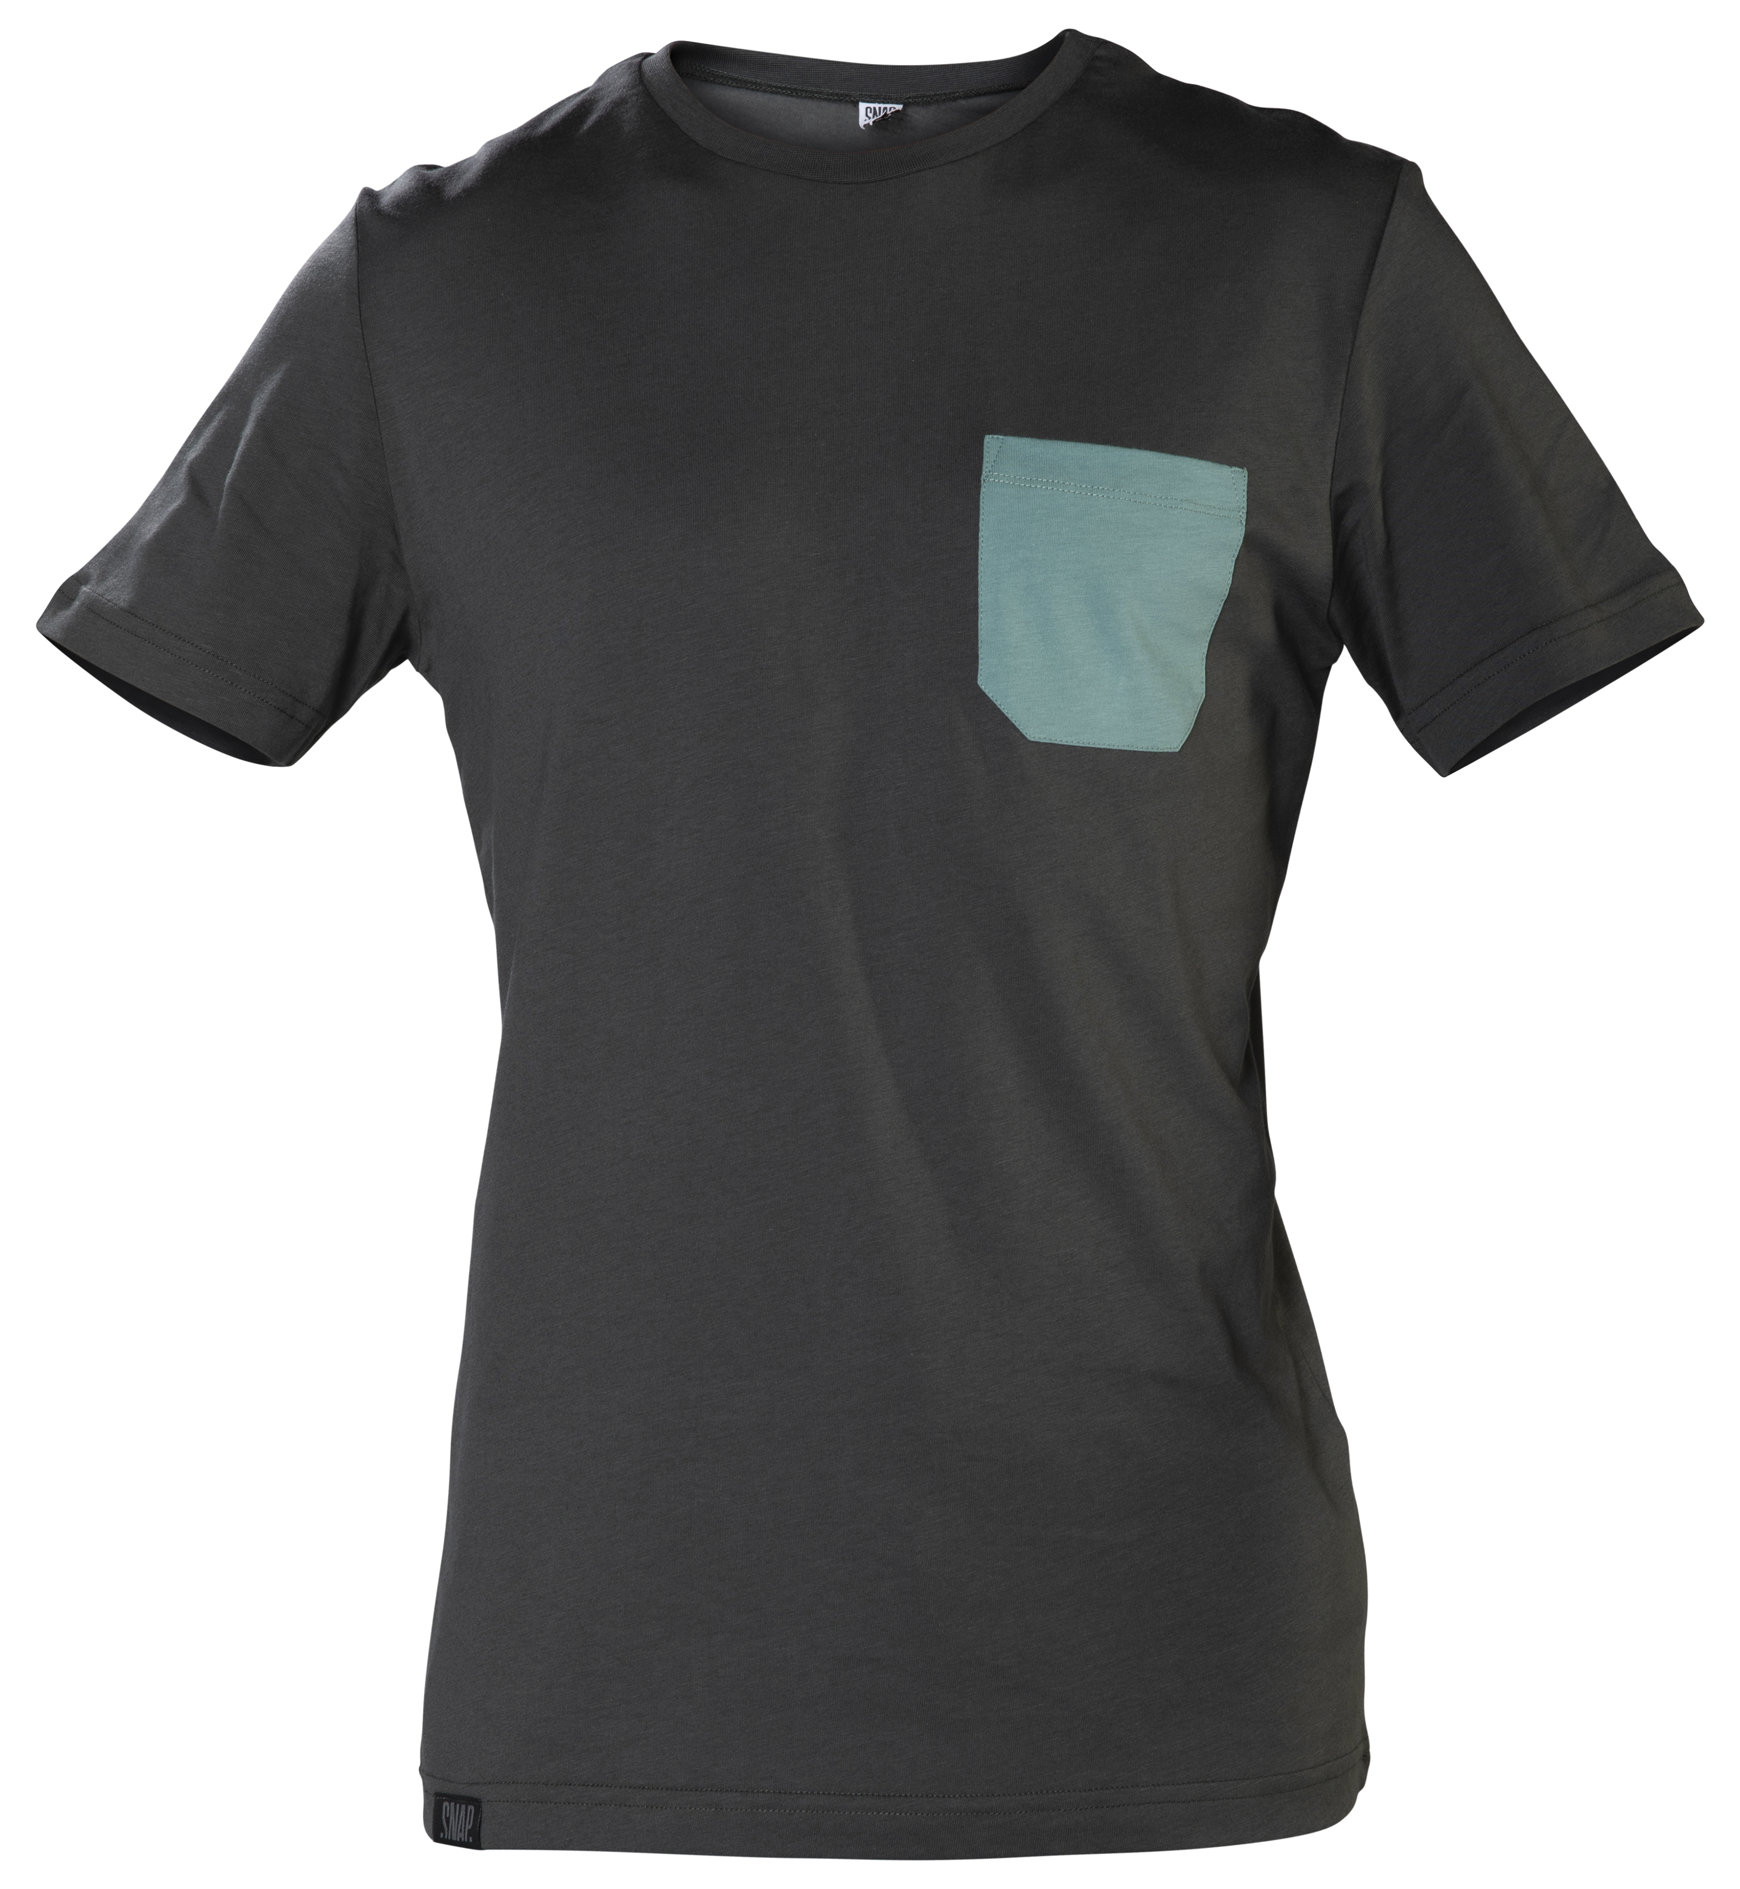 Snap Monochrome Pocket T-Shirt Herren